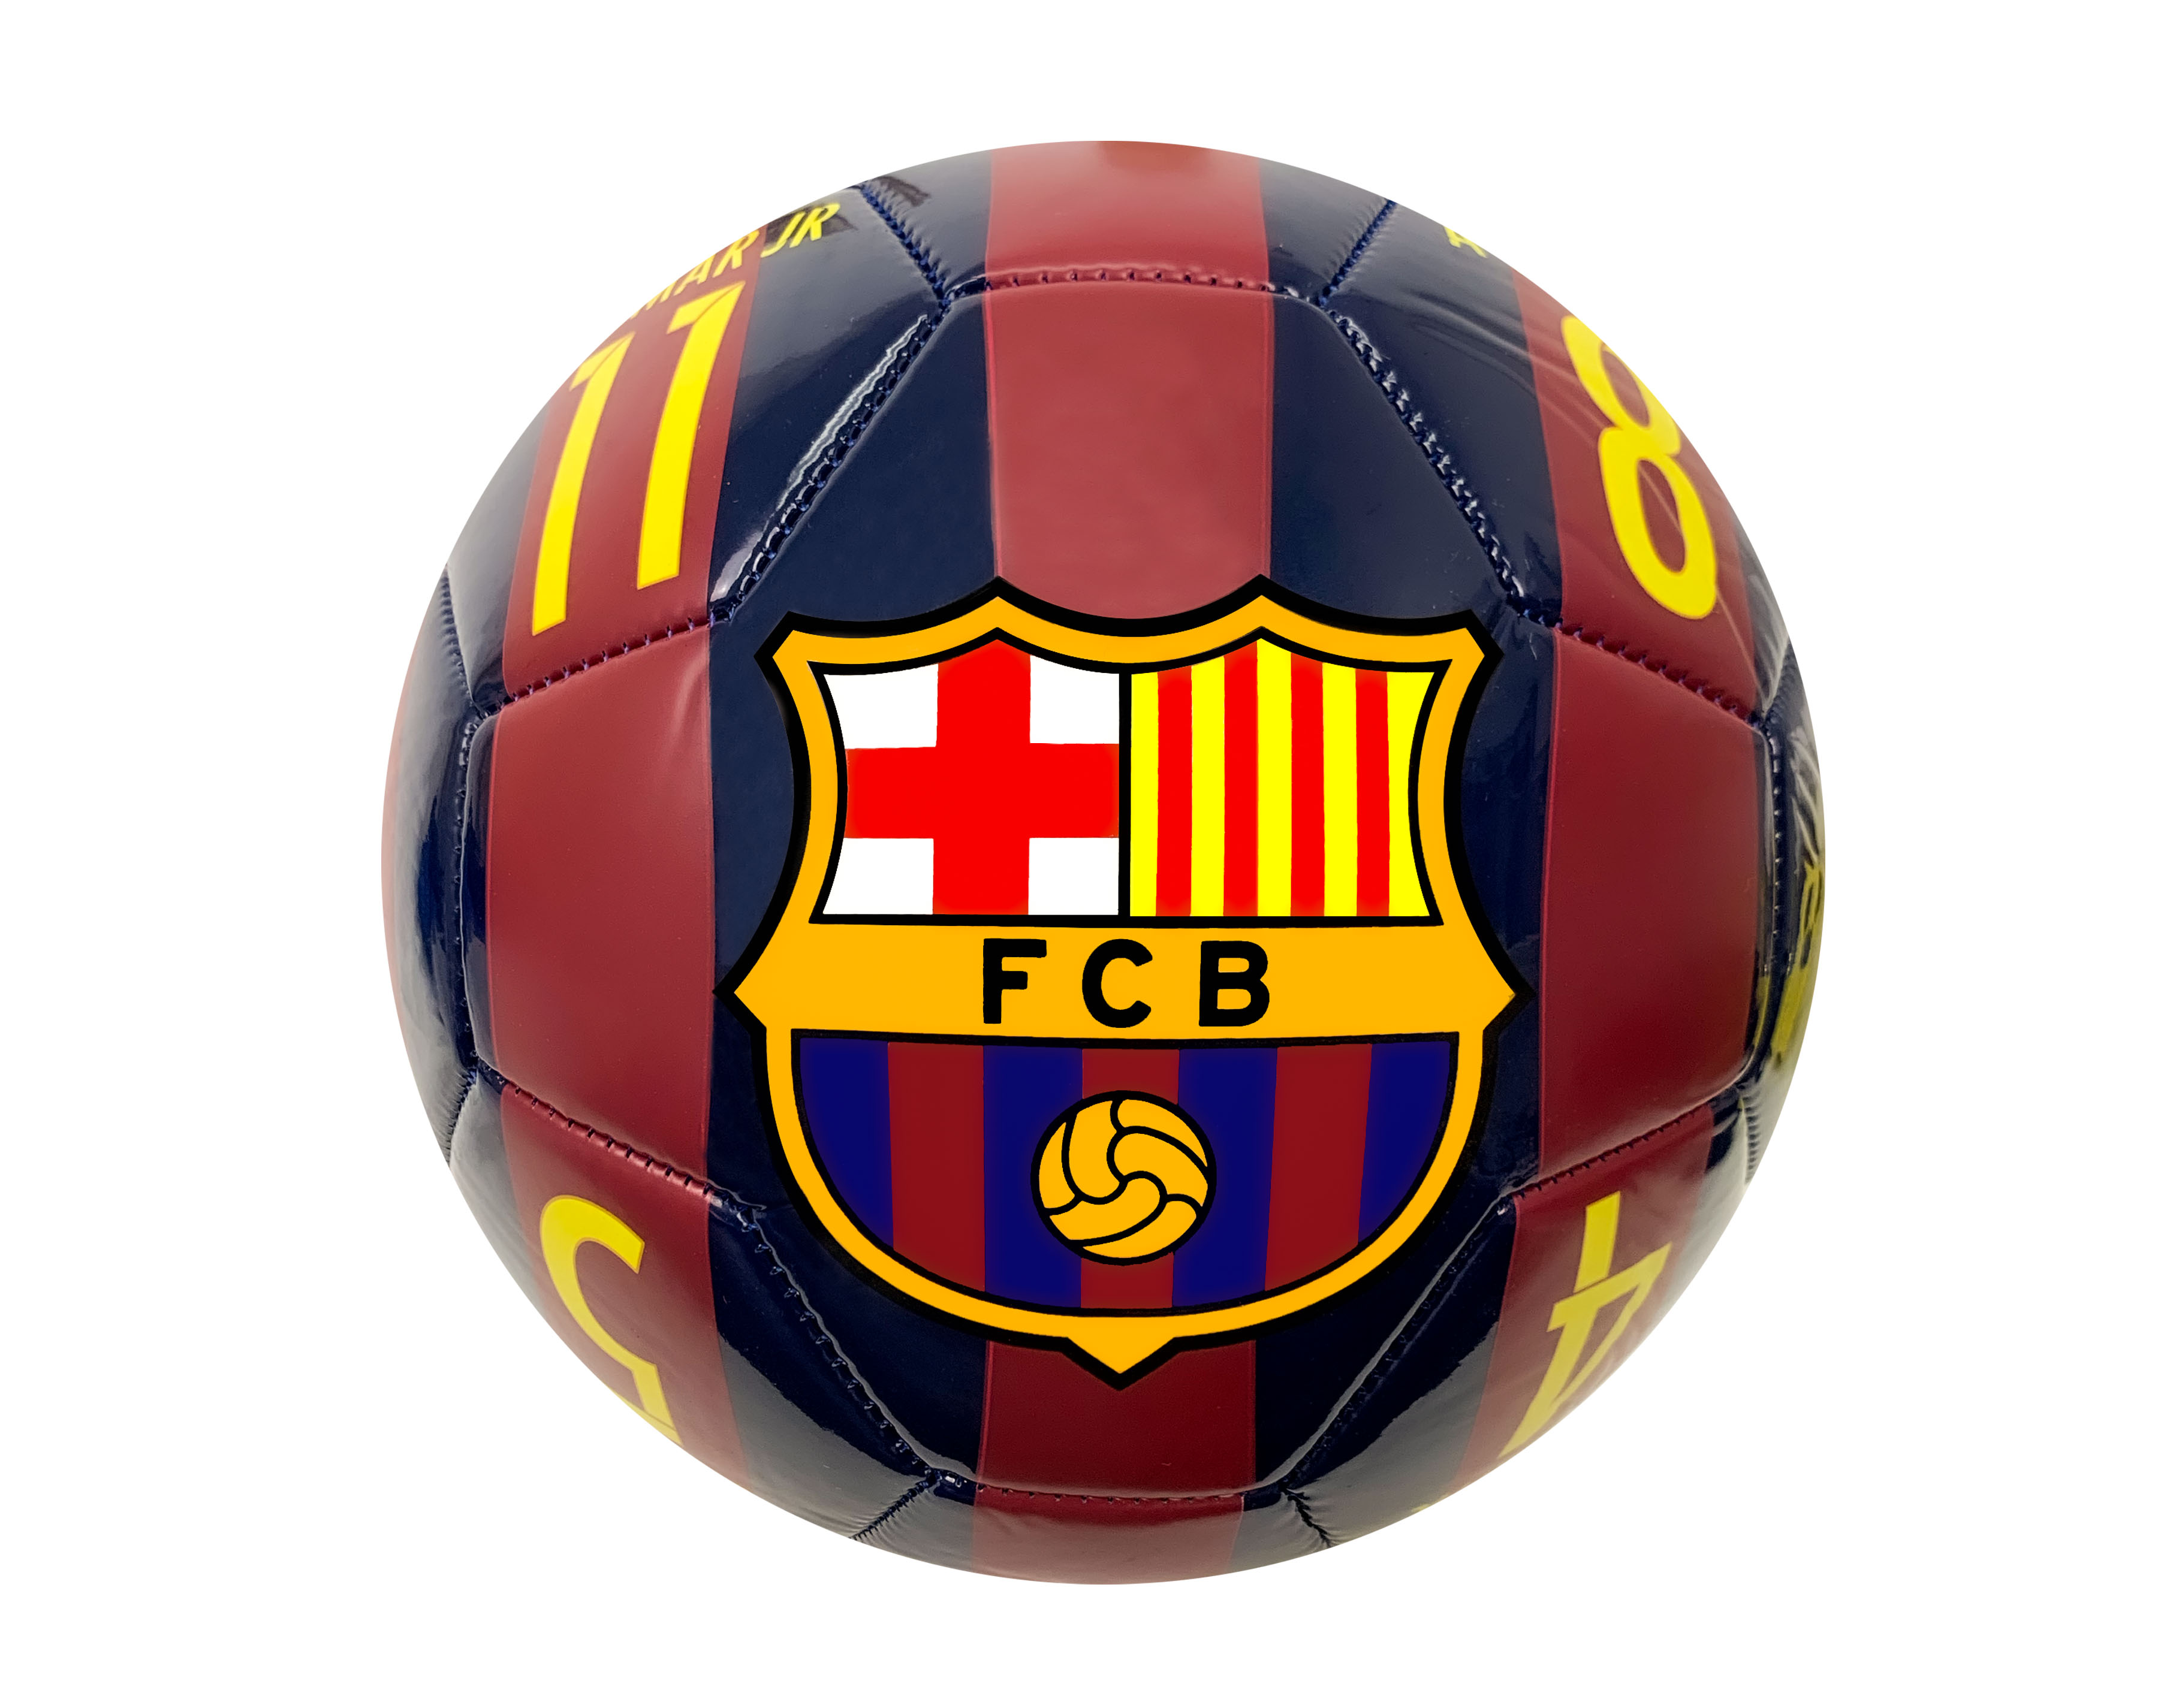 Barcelona Soccer ball (Size 5), FC Barcelona Players Ball Name & Number #5 - image 1 of 5